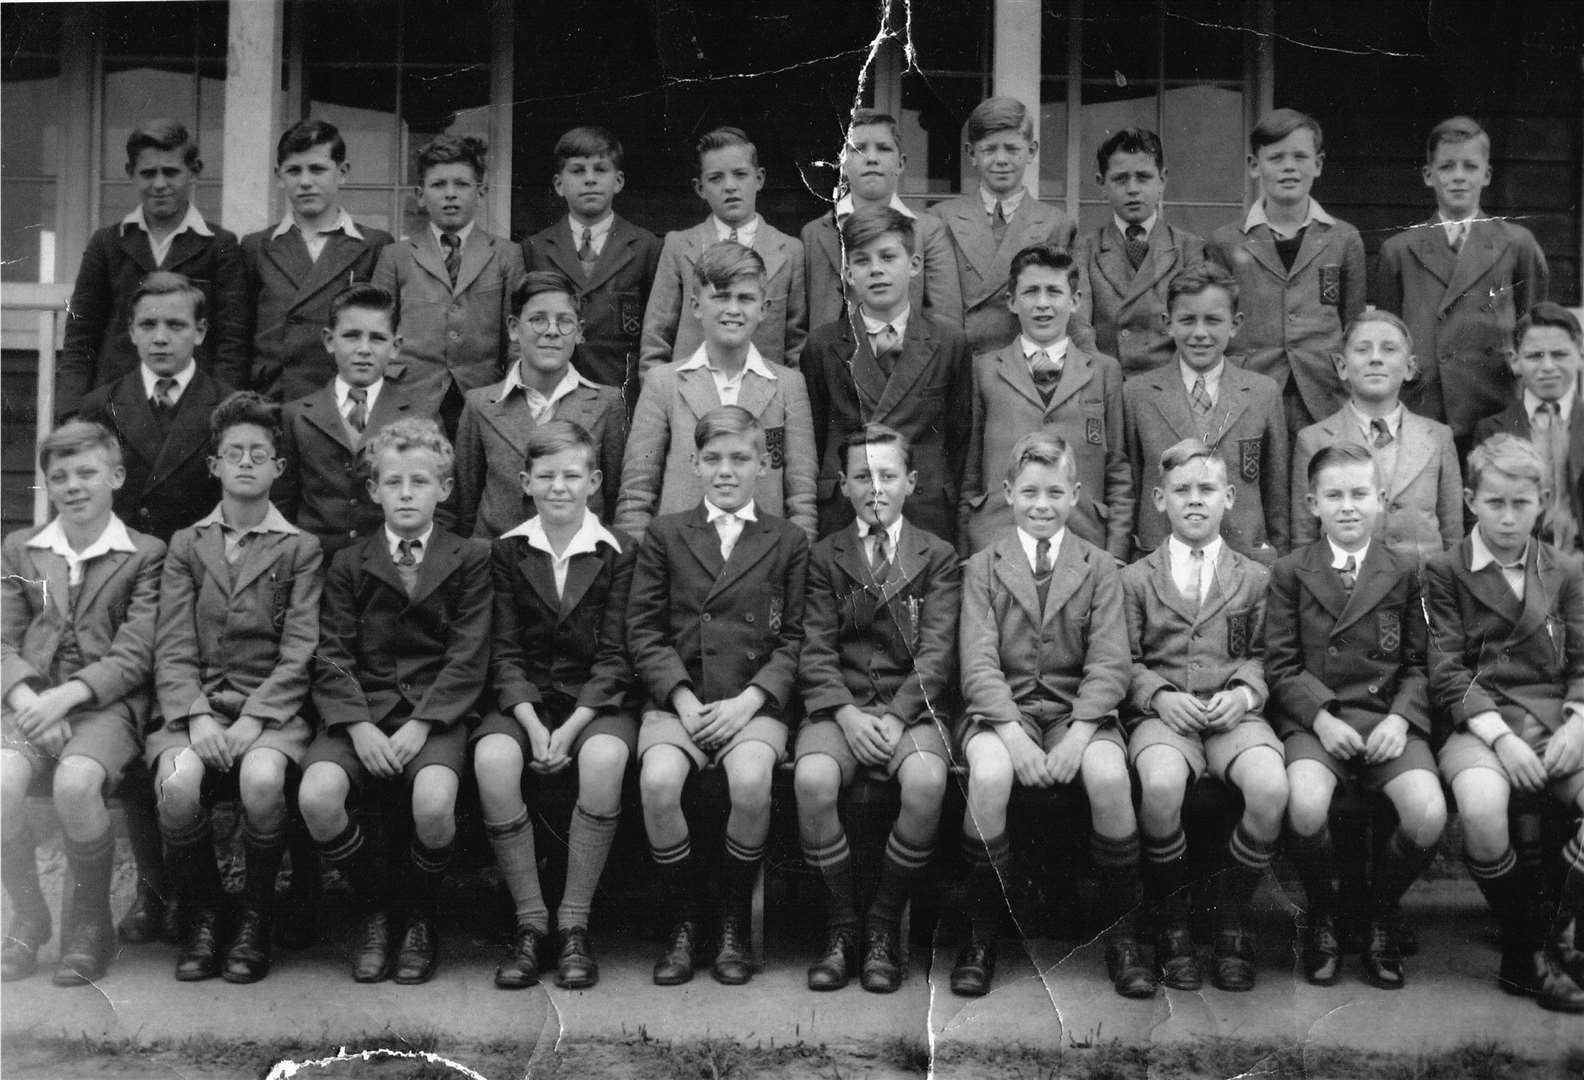 Borden Grammar School boys in 1947